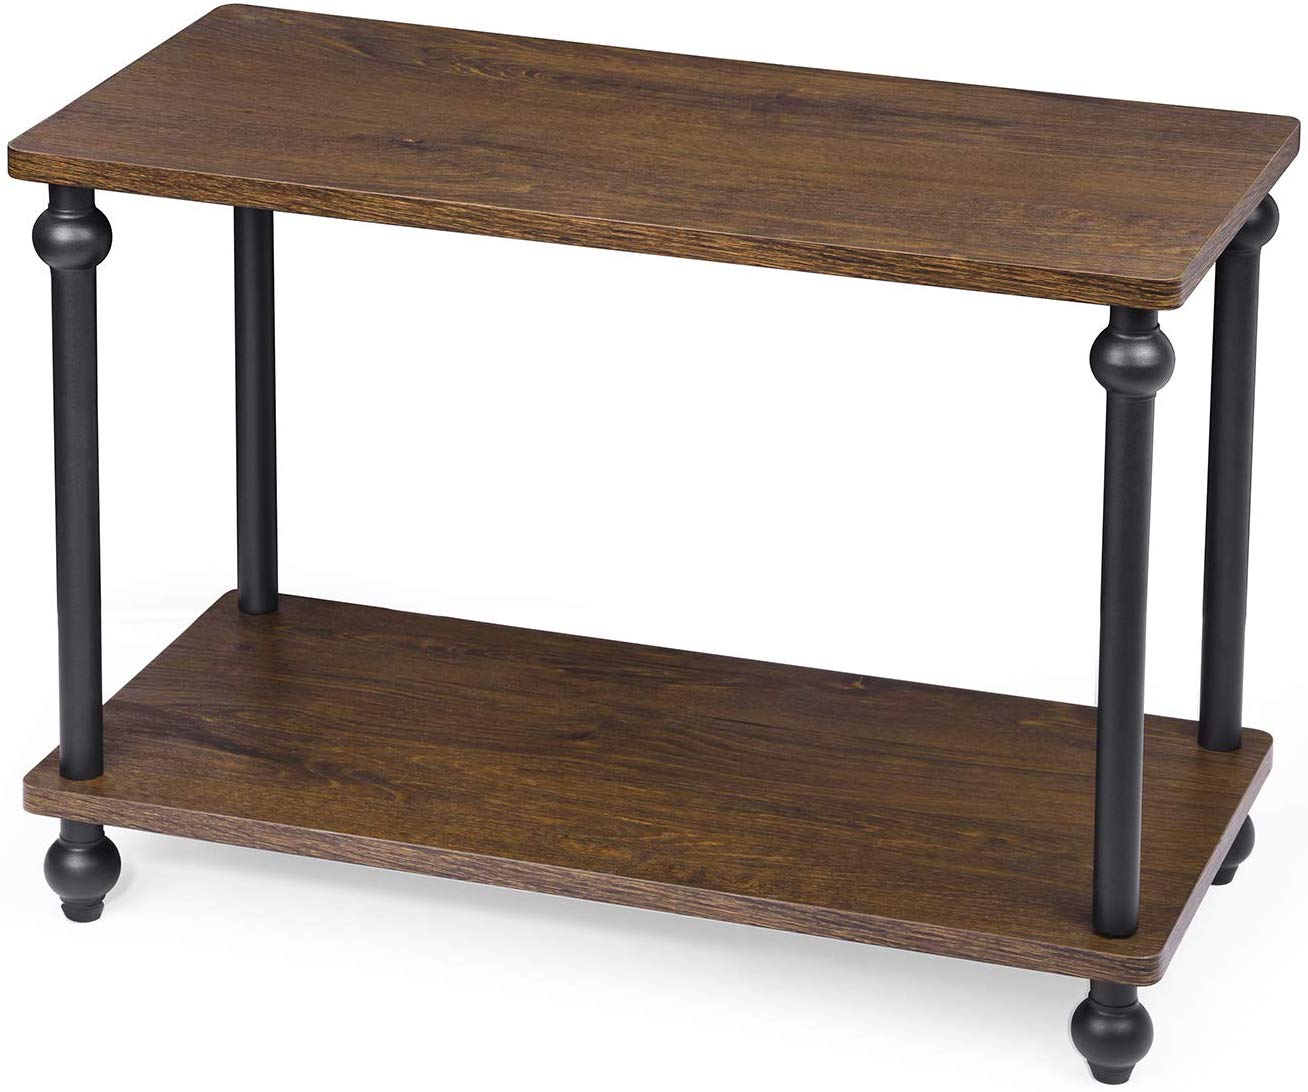 SRIWATANA Vintage Side End Table, 2-Tier Industrial Nightstand, Multipurpose Shelves for Living Room, Bedroom, Kitchen, Dark Walnut